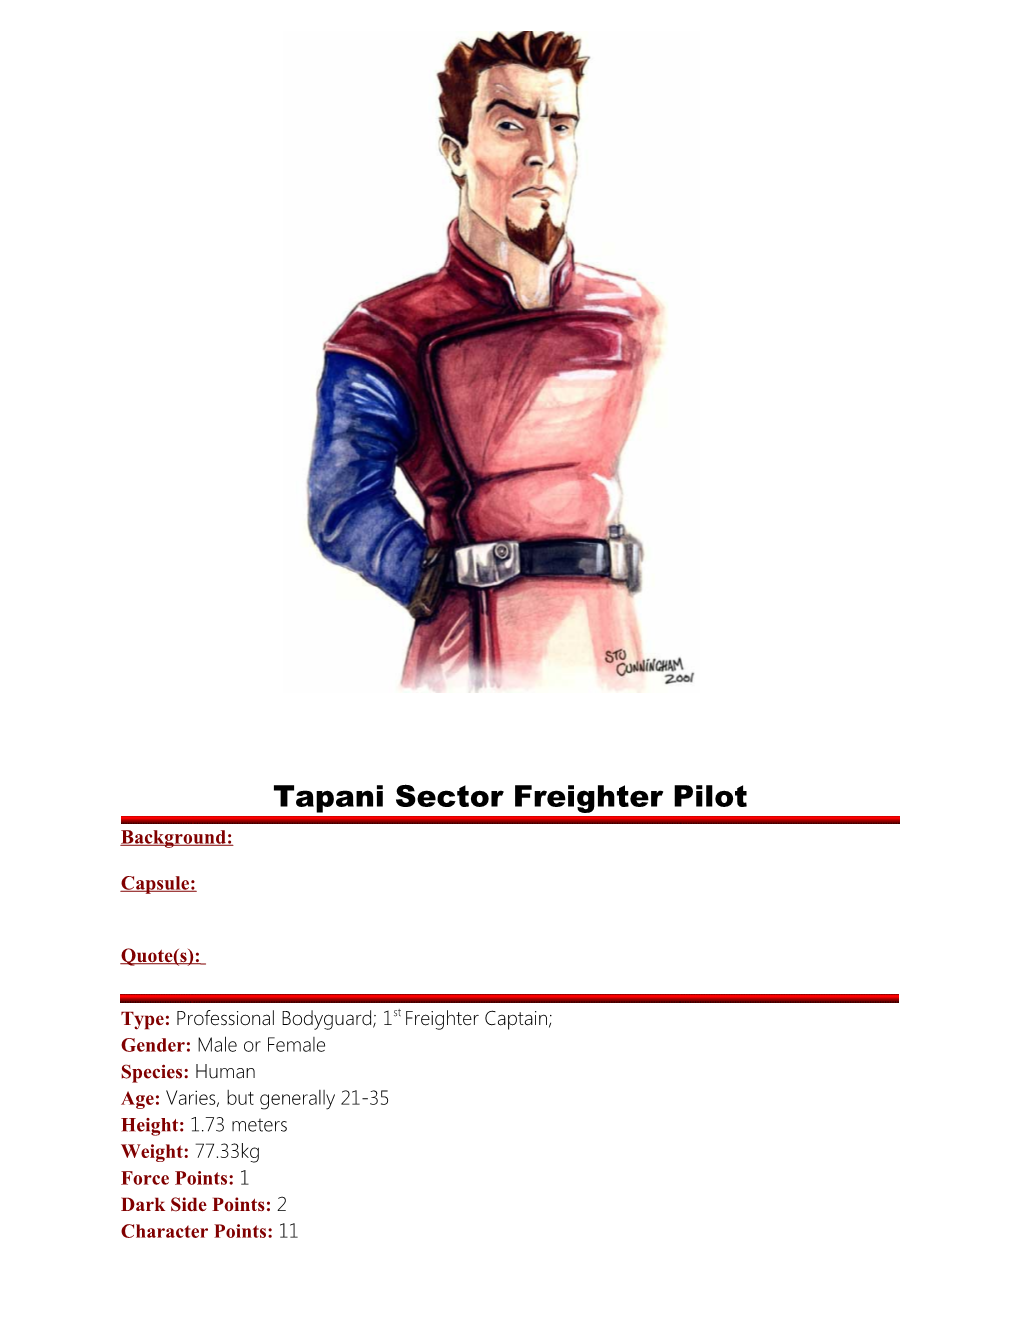 Tapani Sector Freighter Pilot